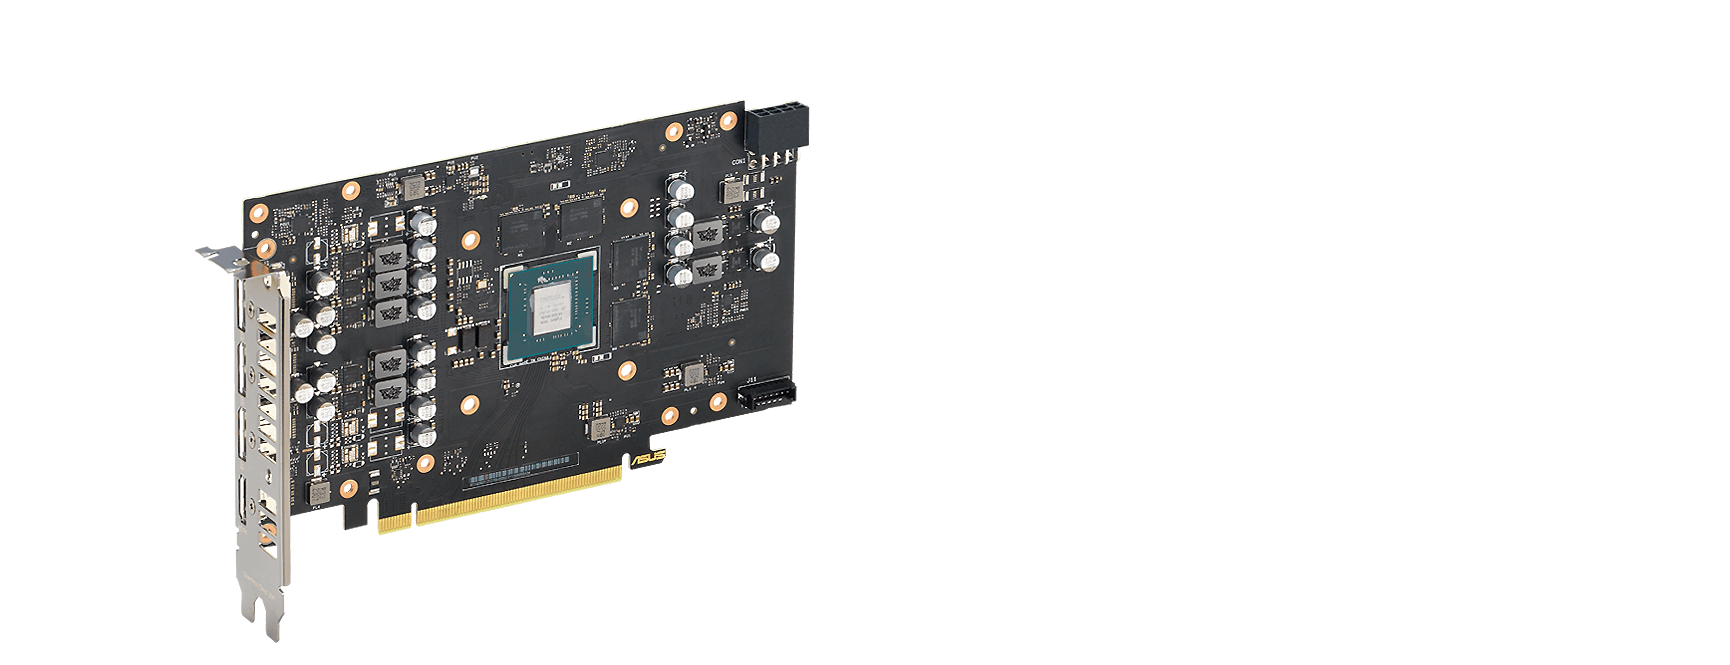 ProArt GeForce RTX™ 4060 Ti OC edition 16GB GDDR6